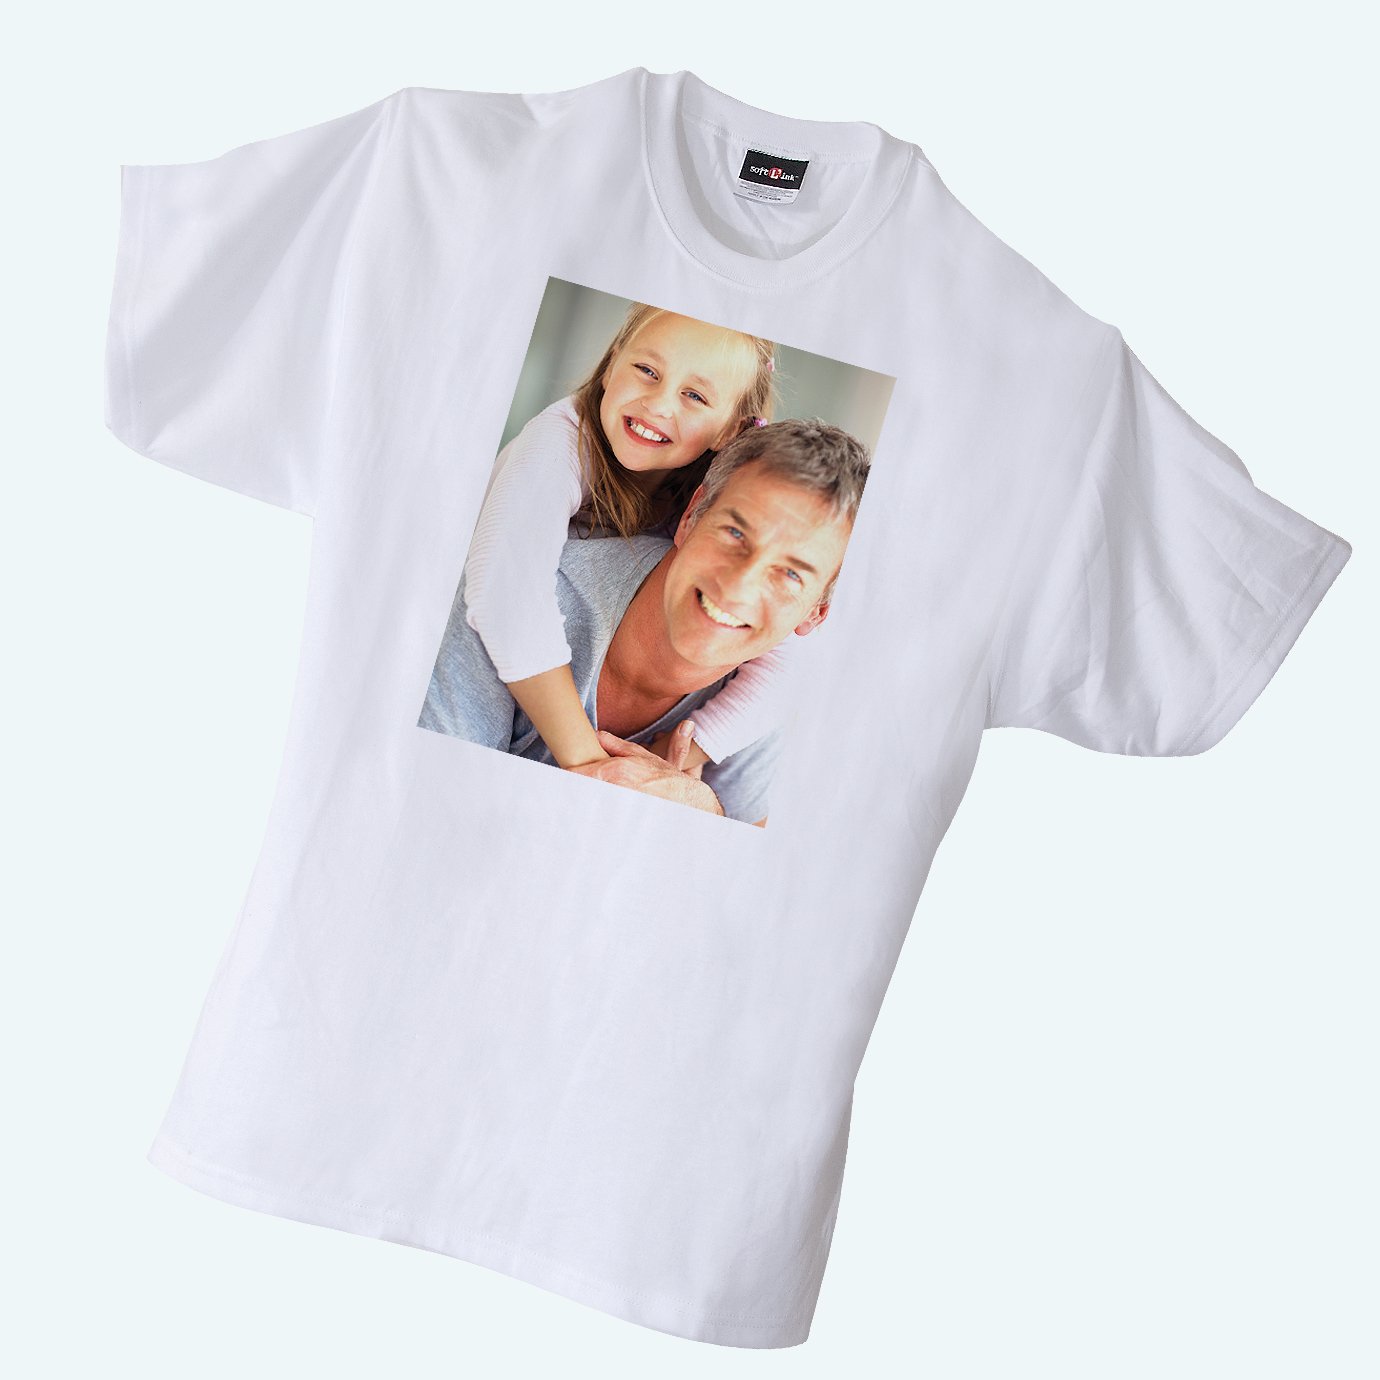 1 Custom T-shirt Printing Shop in Toronto - Bulk Tees or One-Off Printed  Shirts